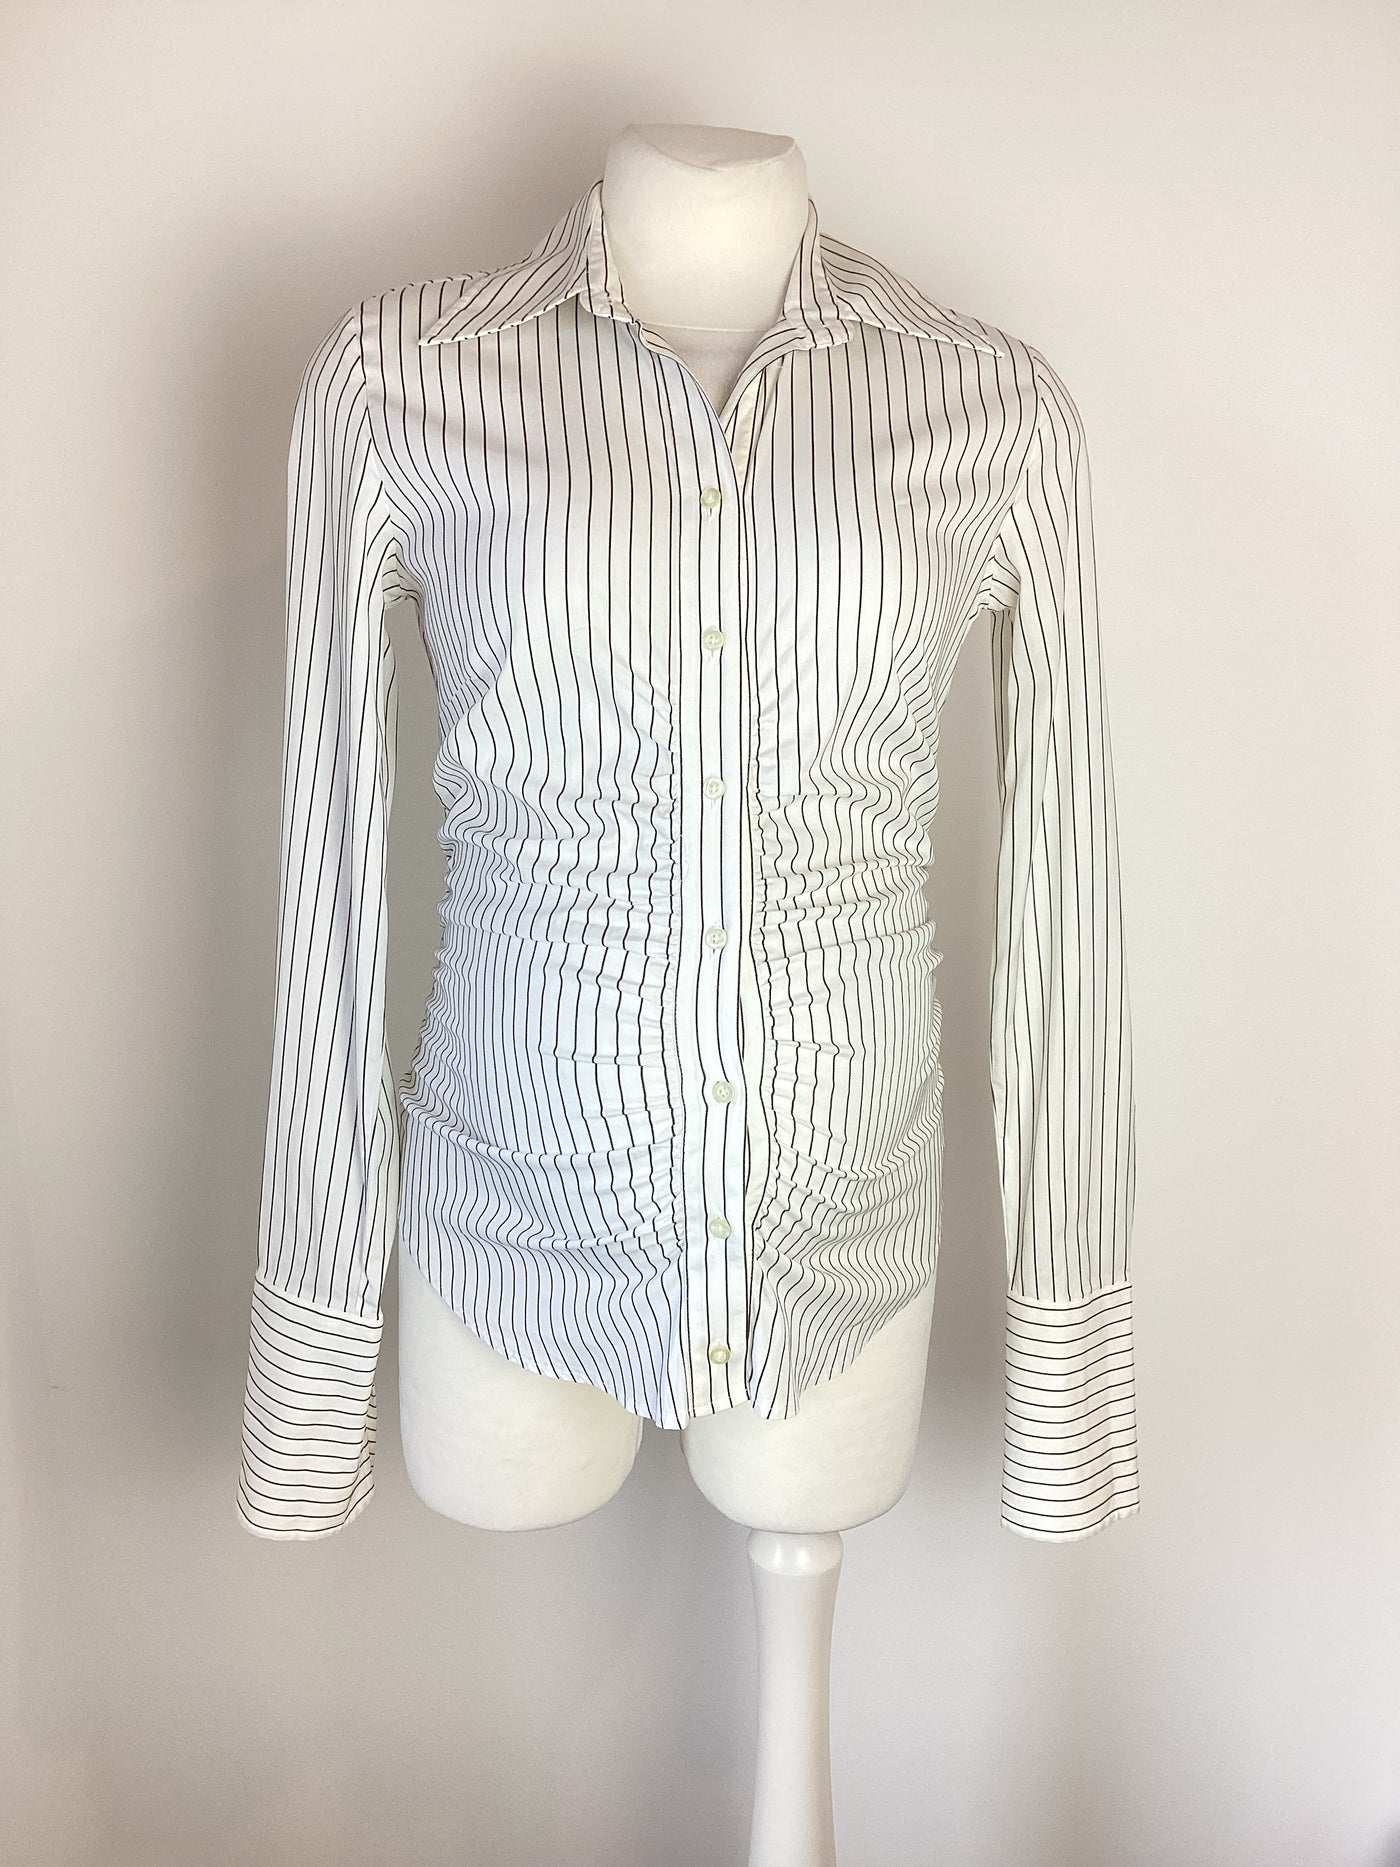 Thomas Pink Maternity white & black stripe long sleeved shirt - Size 6